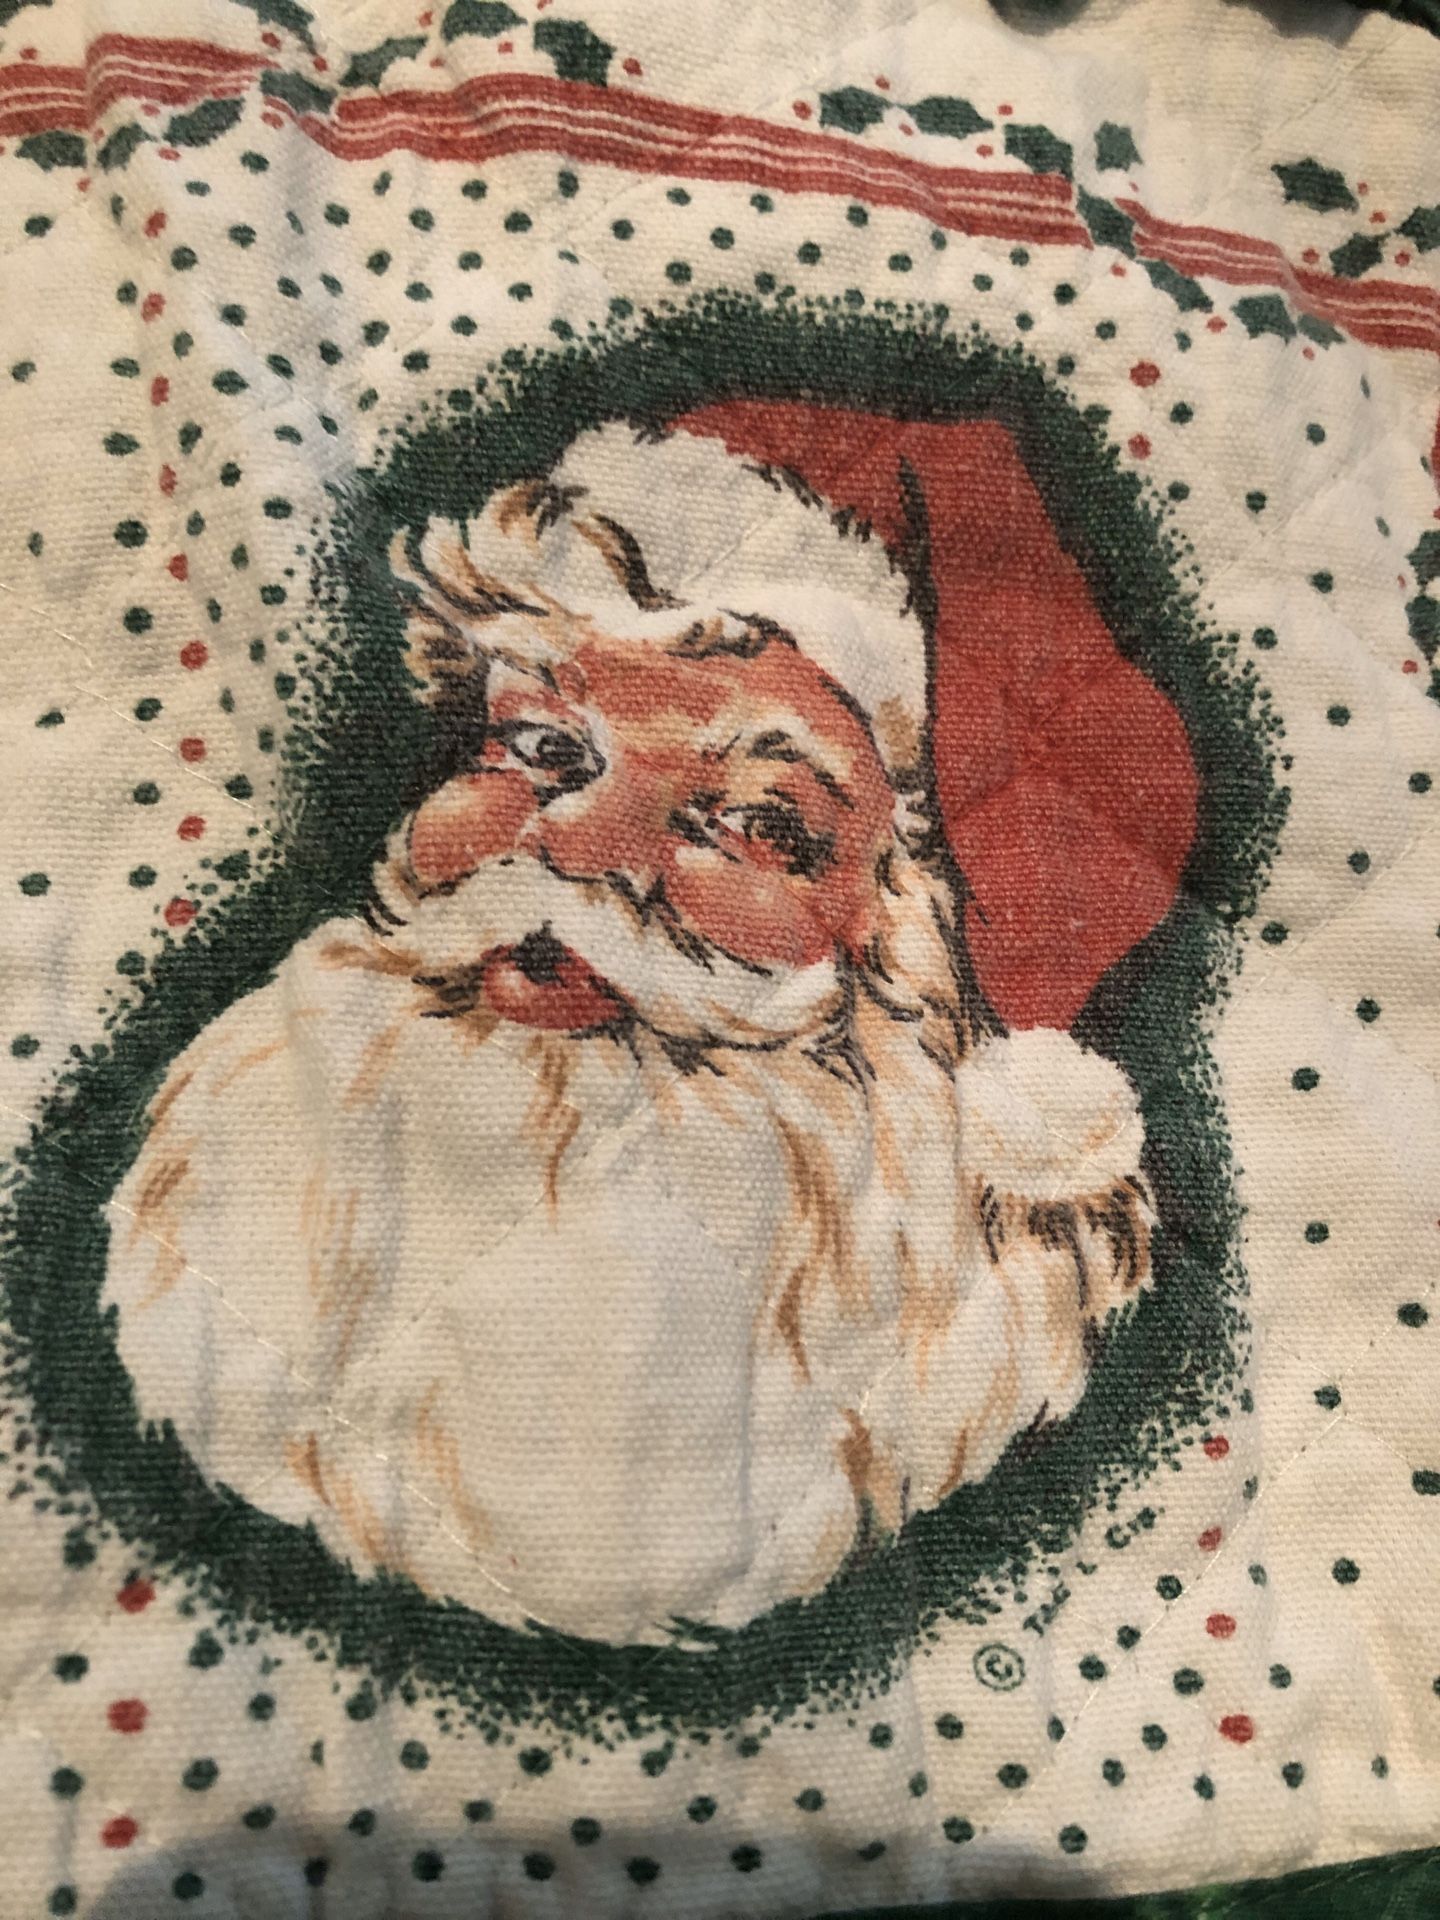 Christmas apron and linens